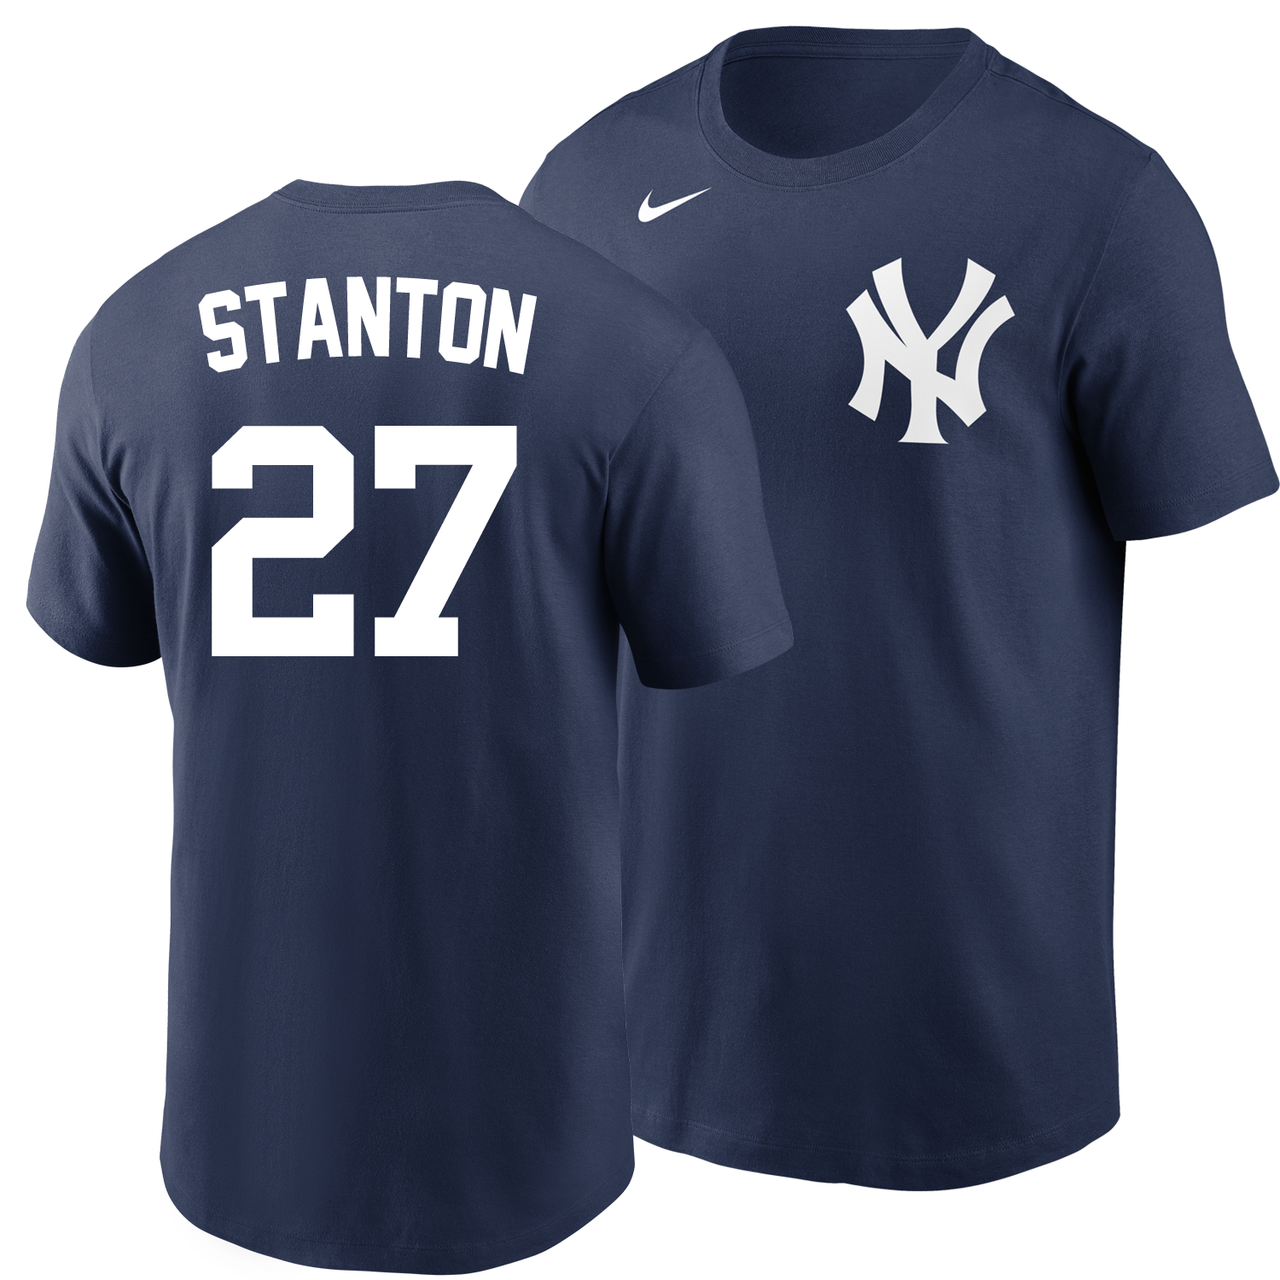 Giancarlo Stanton Youth T-Shirt - Navy NY Yankees Kids T-Shirt